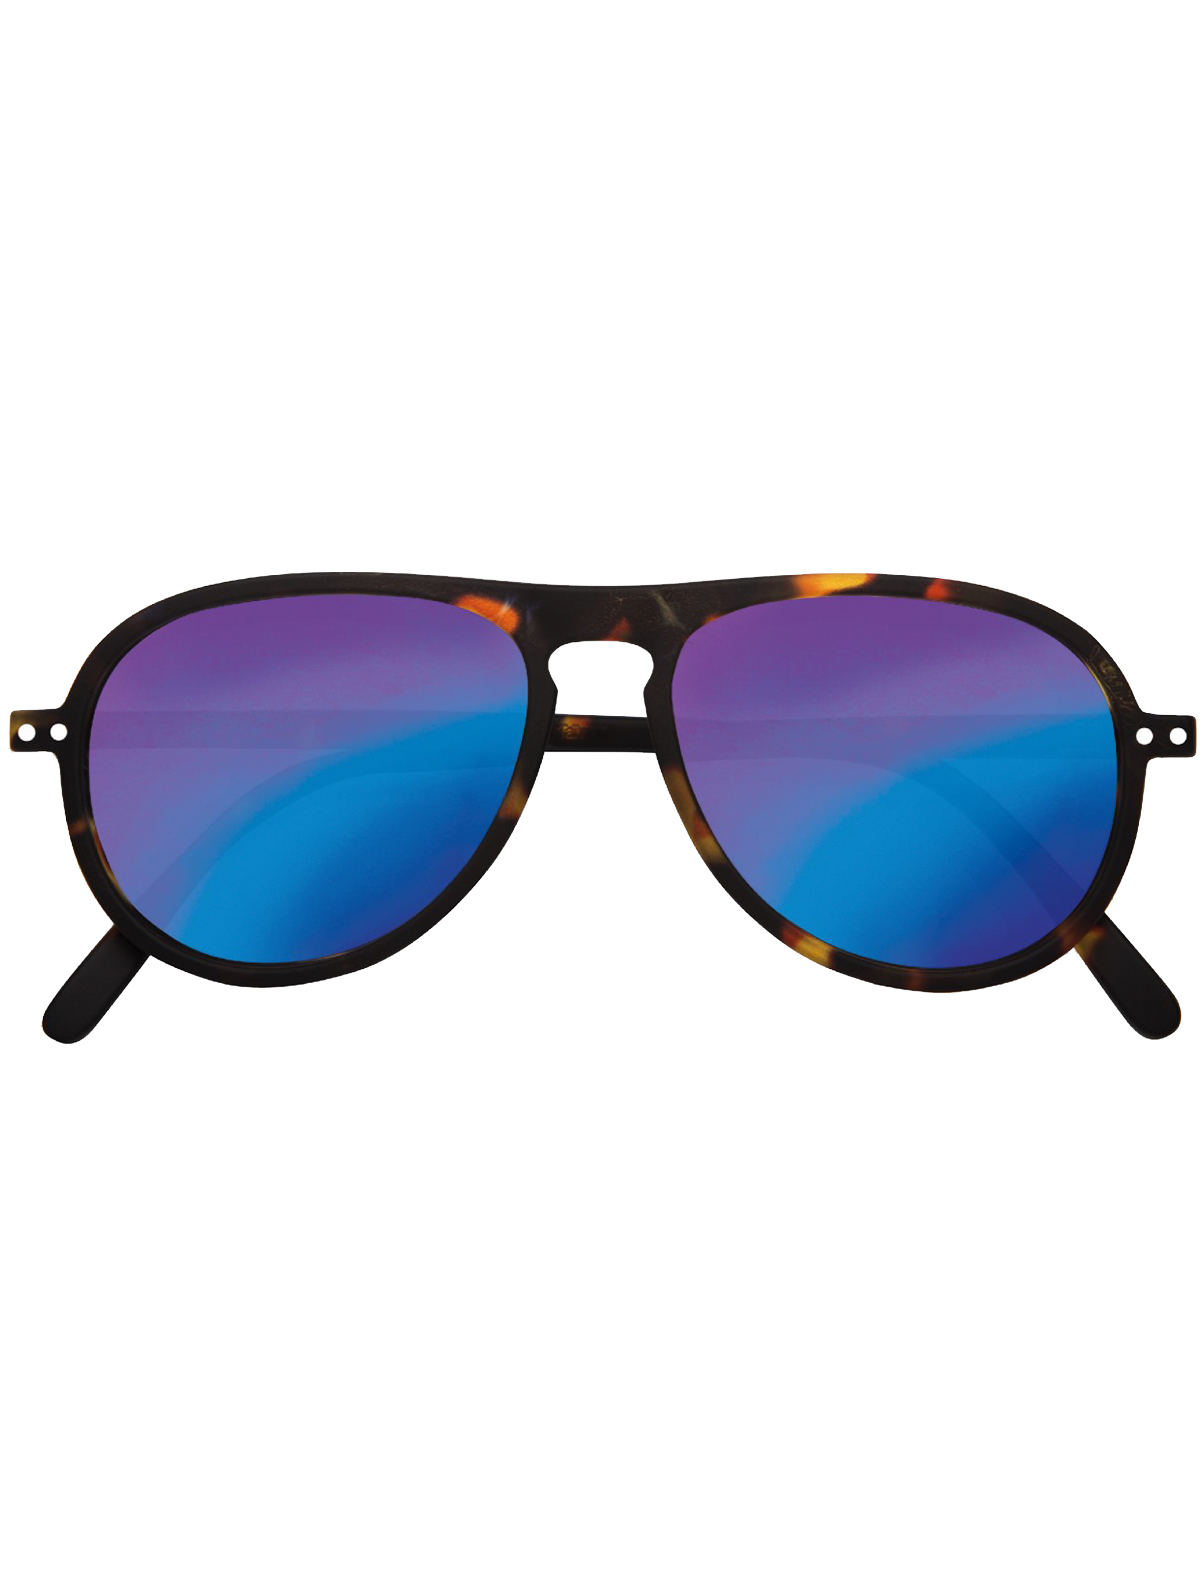 IZIPIZI очки солнцезащитные #l Blue Tortoise Mirror. Очки IZIPIZI #H Blue Tortoise (Blue Light). Очки +1 черепаховые. Очки черепаховые с голубыми линзами. Купить очки izipizi